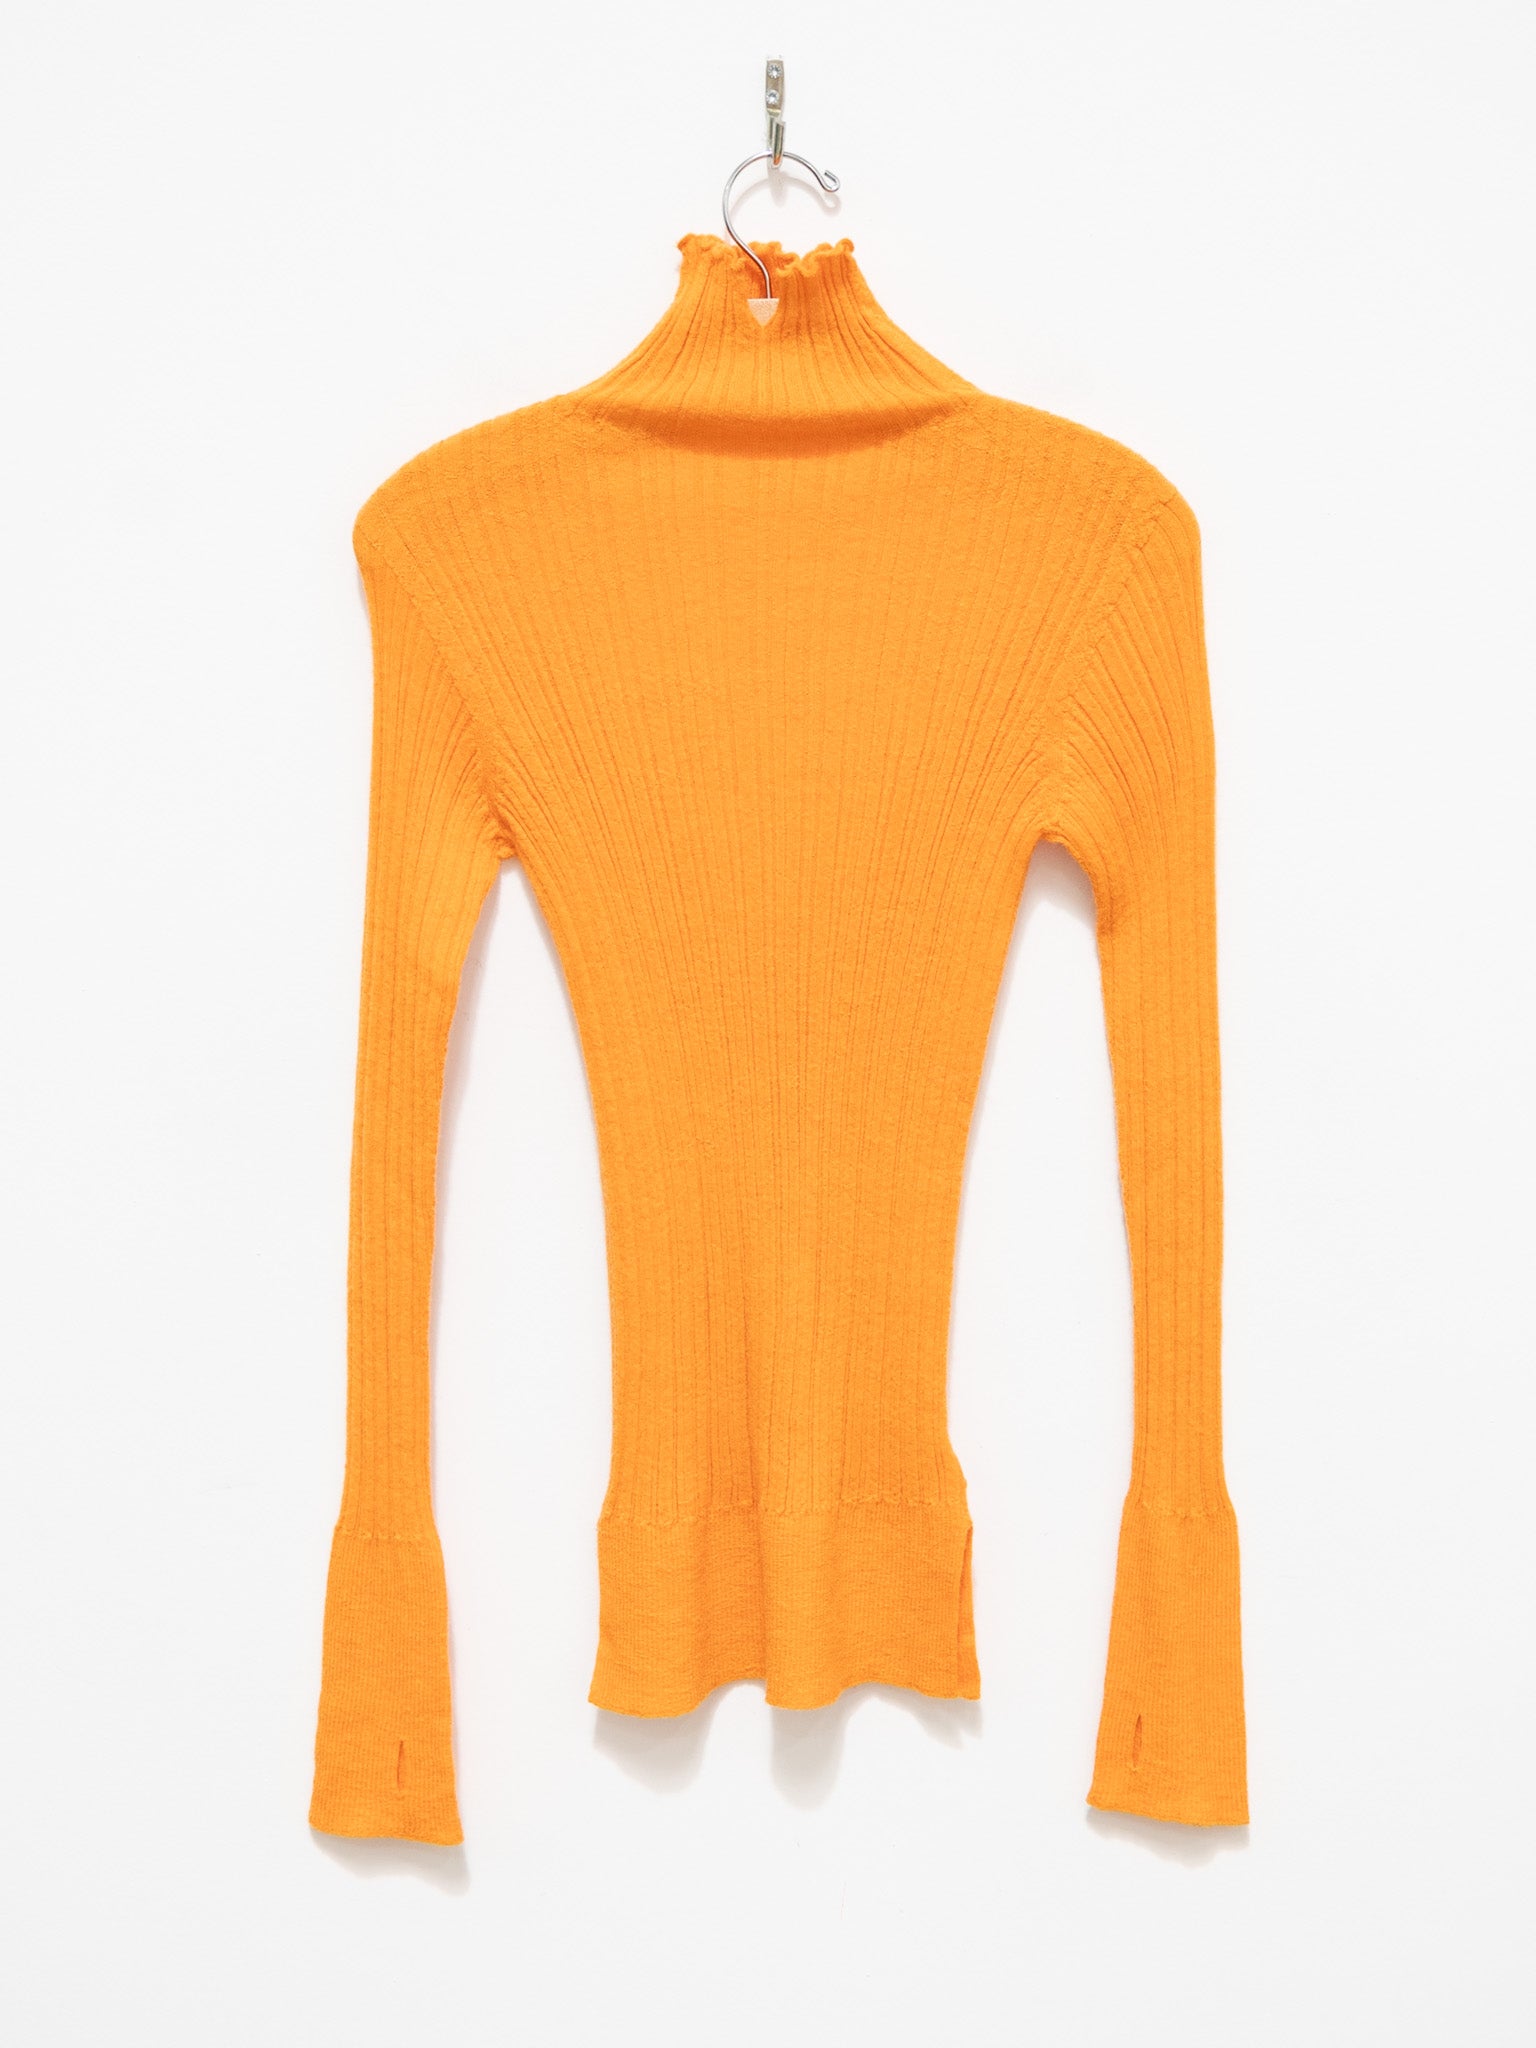 Namu Shop - Unfil Baby Suri Alpaca High Neck Sweater - Light Orange